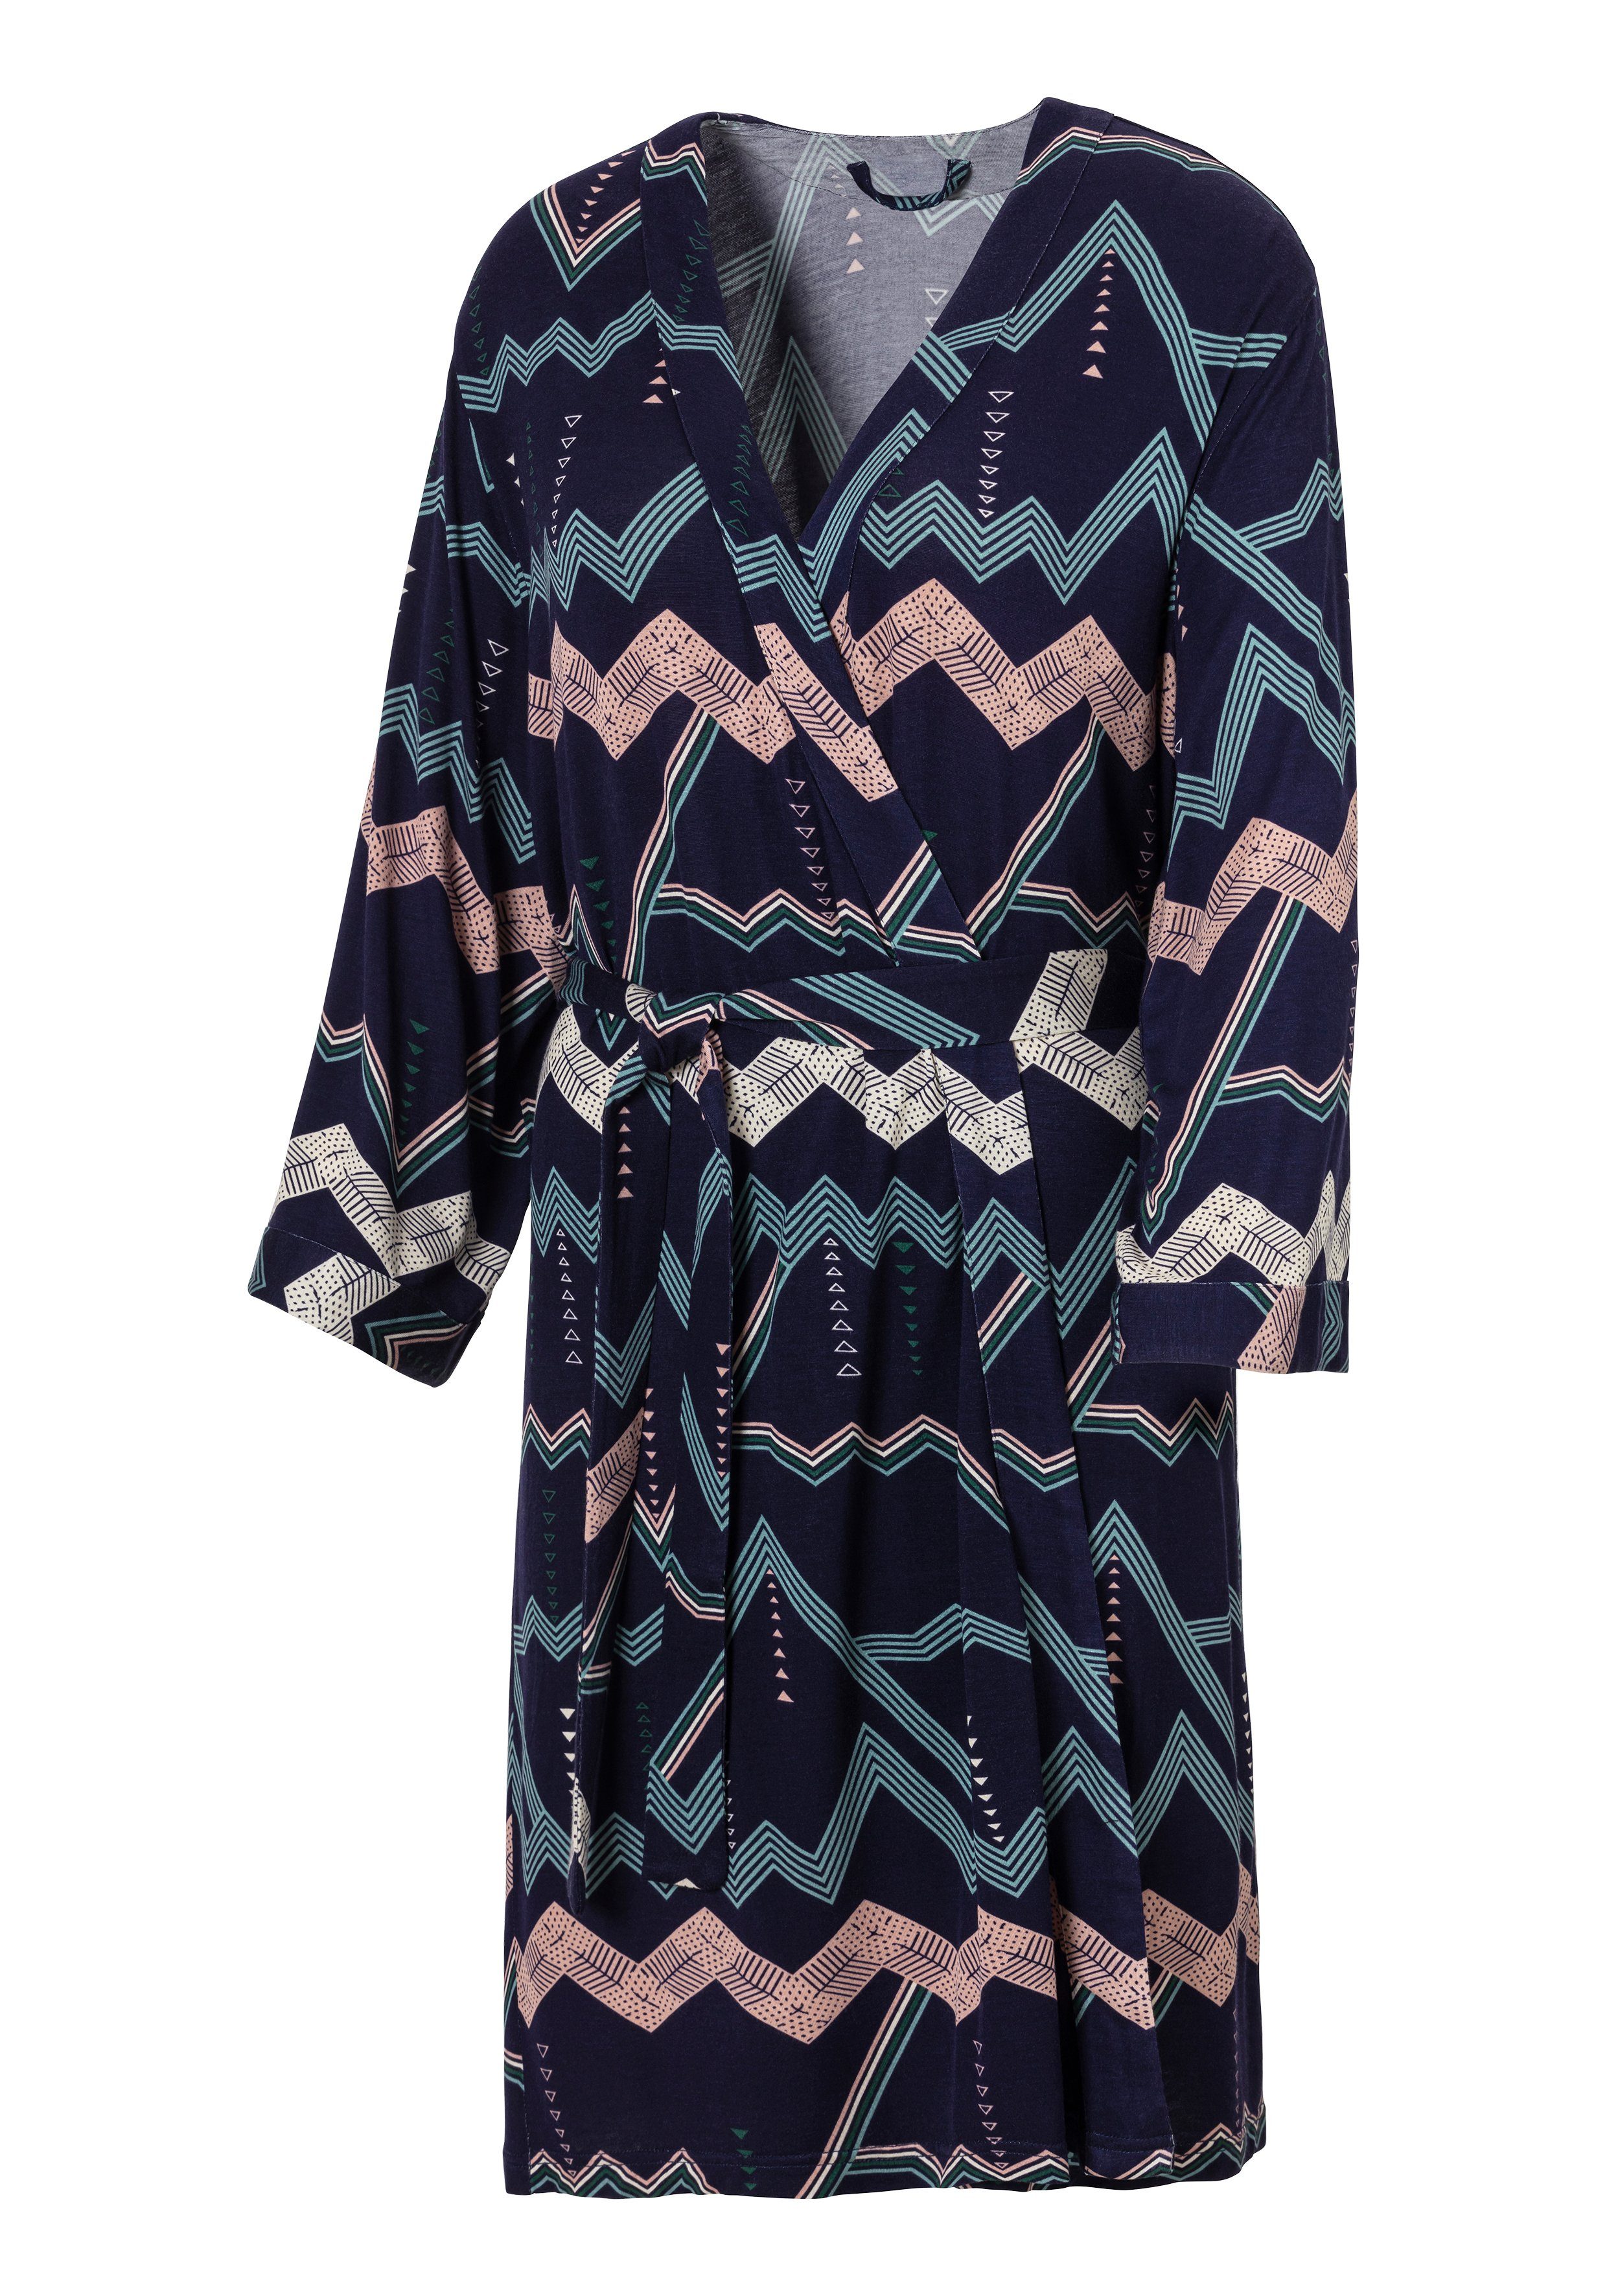 LASCANA Kimono, Kurzform, mit Muster Viskose, Gürtel, Zick-Zack grafischem dunkelblau